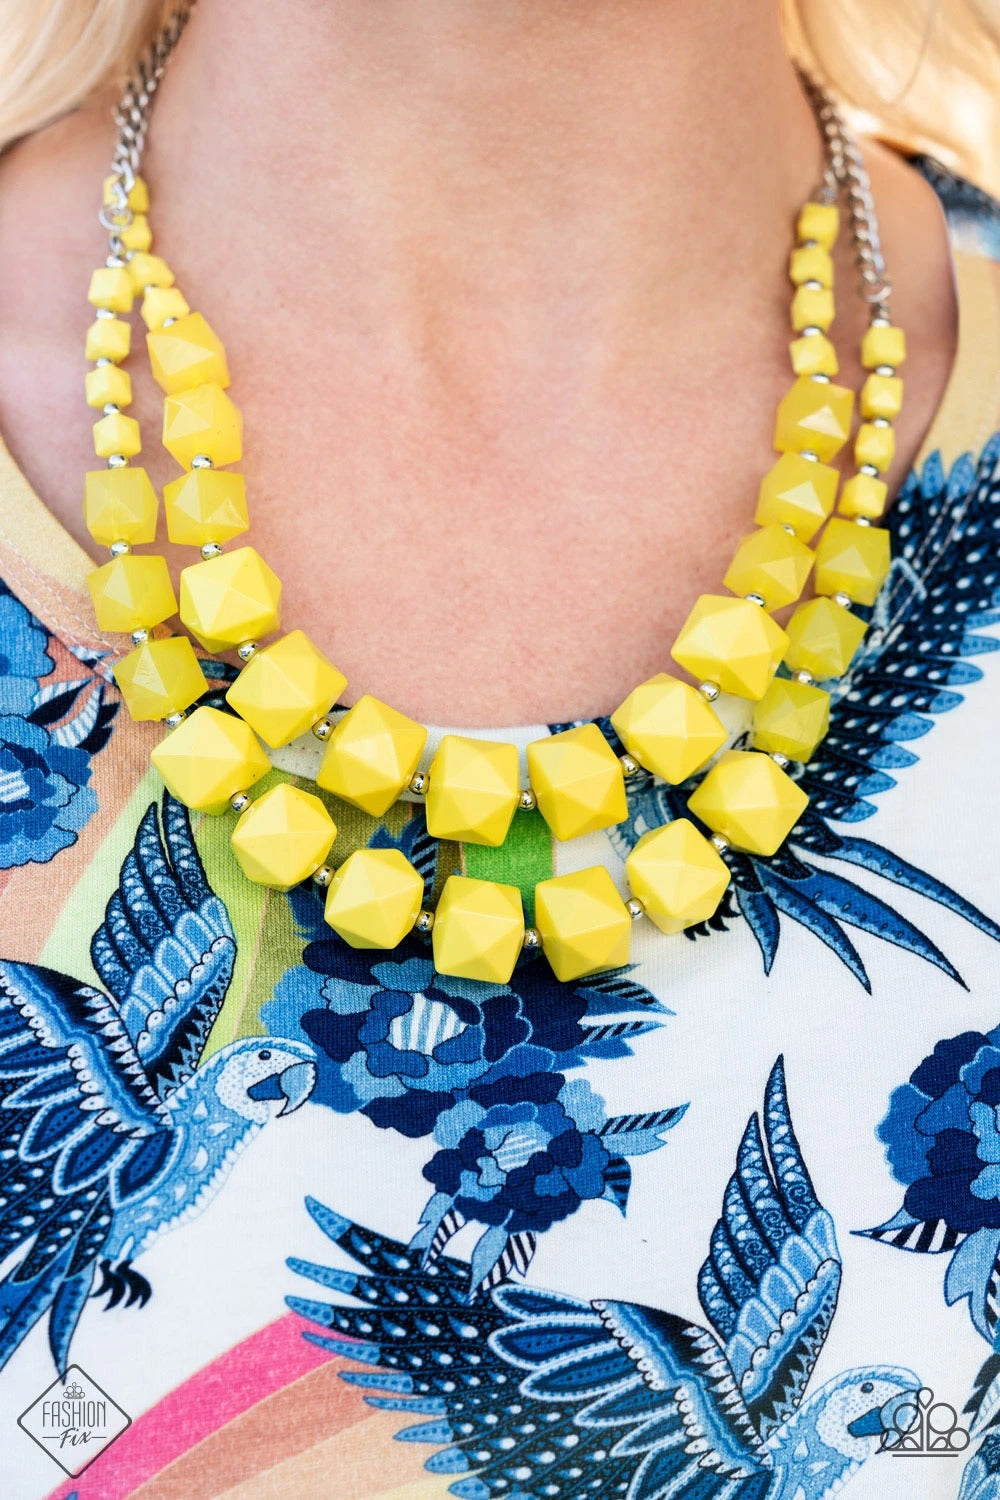 Paparazzi Summer Excursion Yellow Short Necklace - Fashion Fix Glimpses of Malibu July 2021